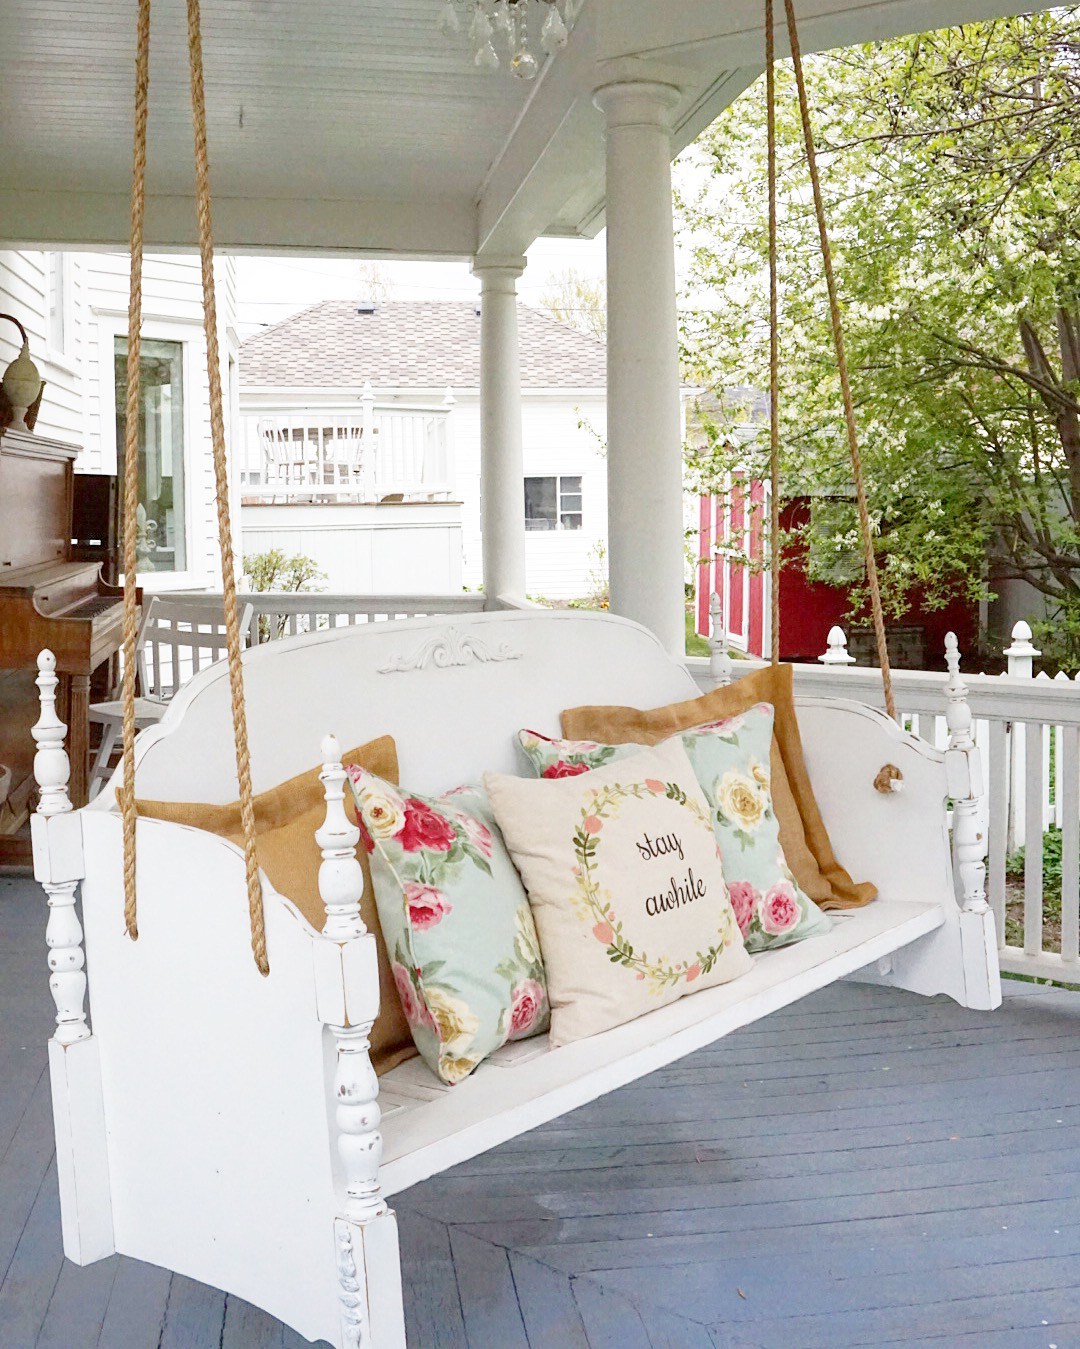 Turn an old bed into a DIY porch swing kellyelko.com #DIY #diyideas #porch #porchswing #farmhousestyle